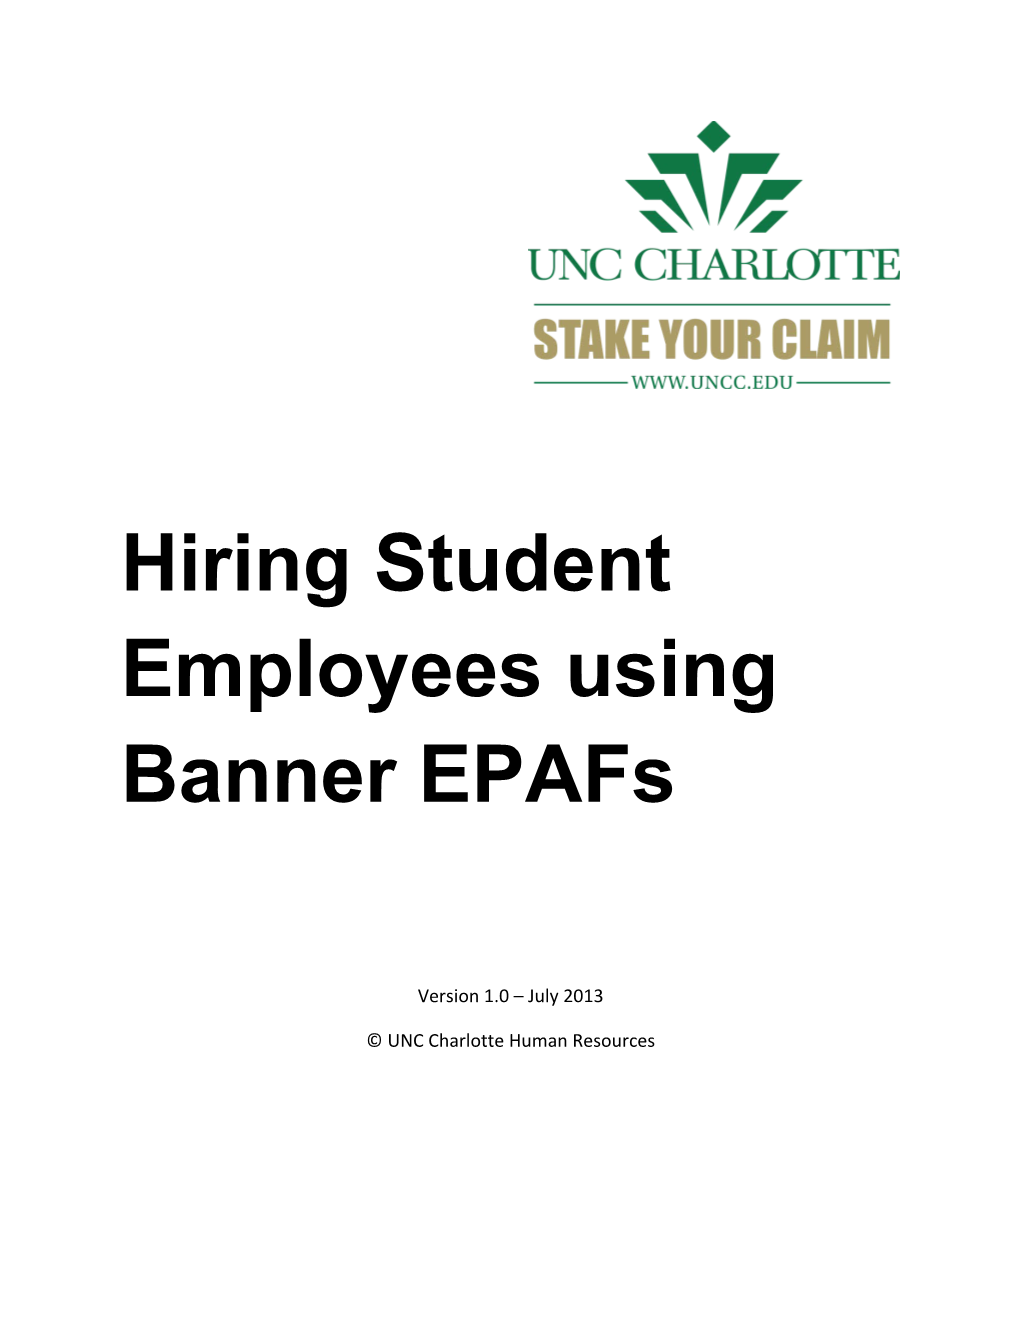 Hiring Student Employees Using Banner Epafs